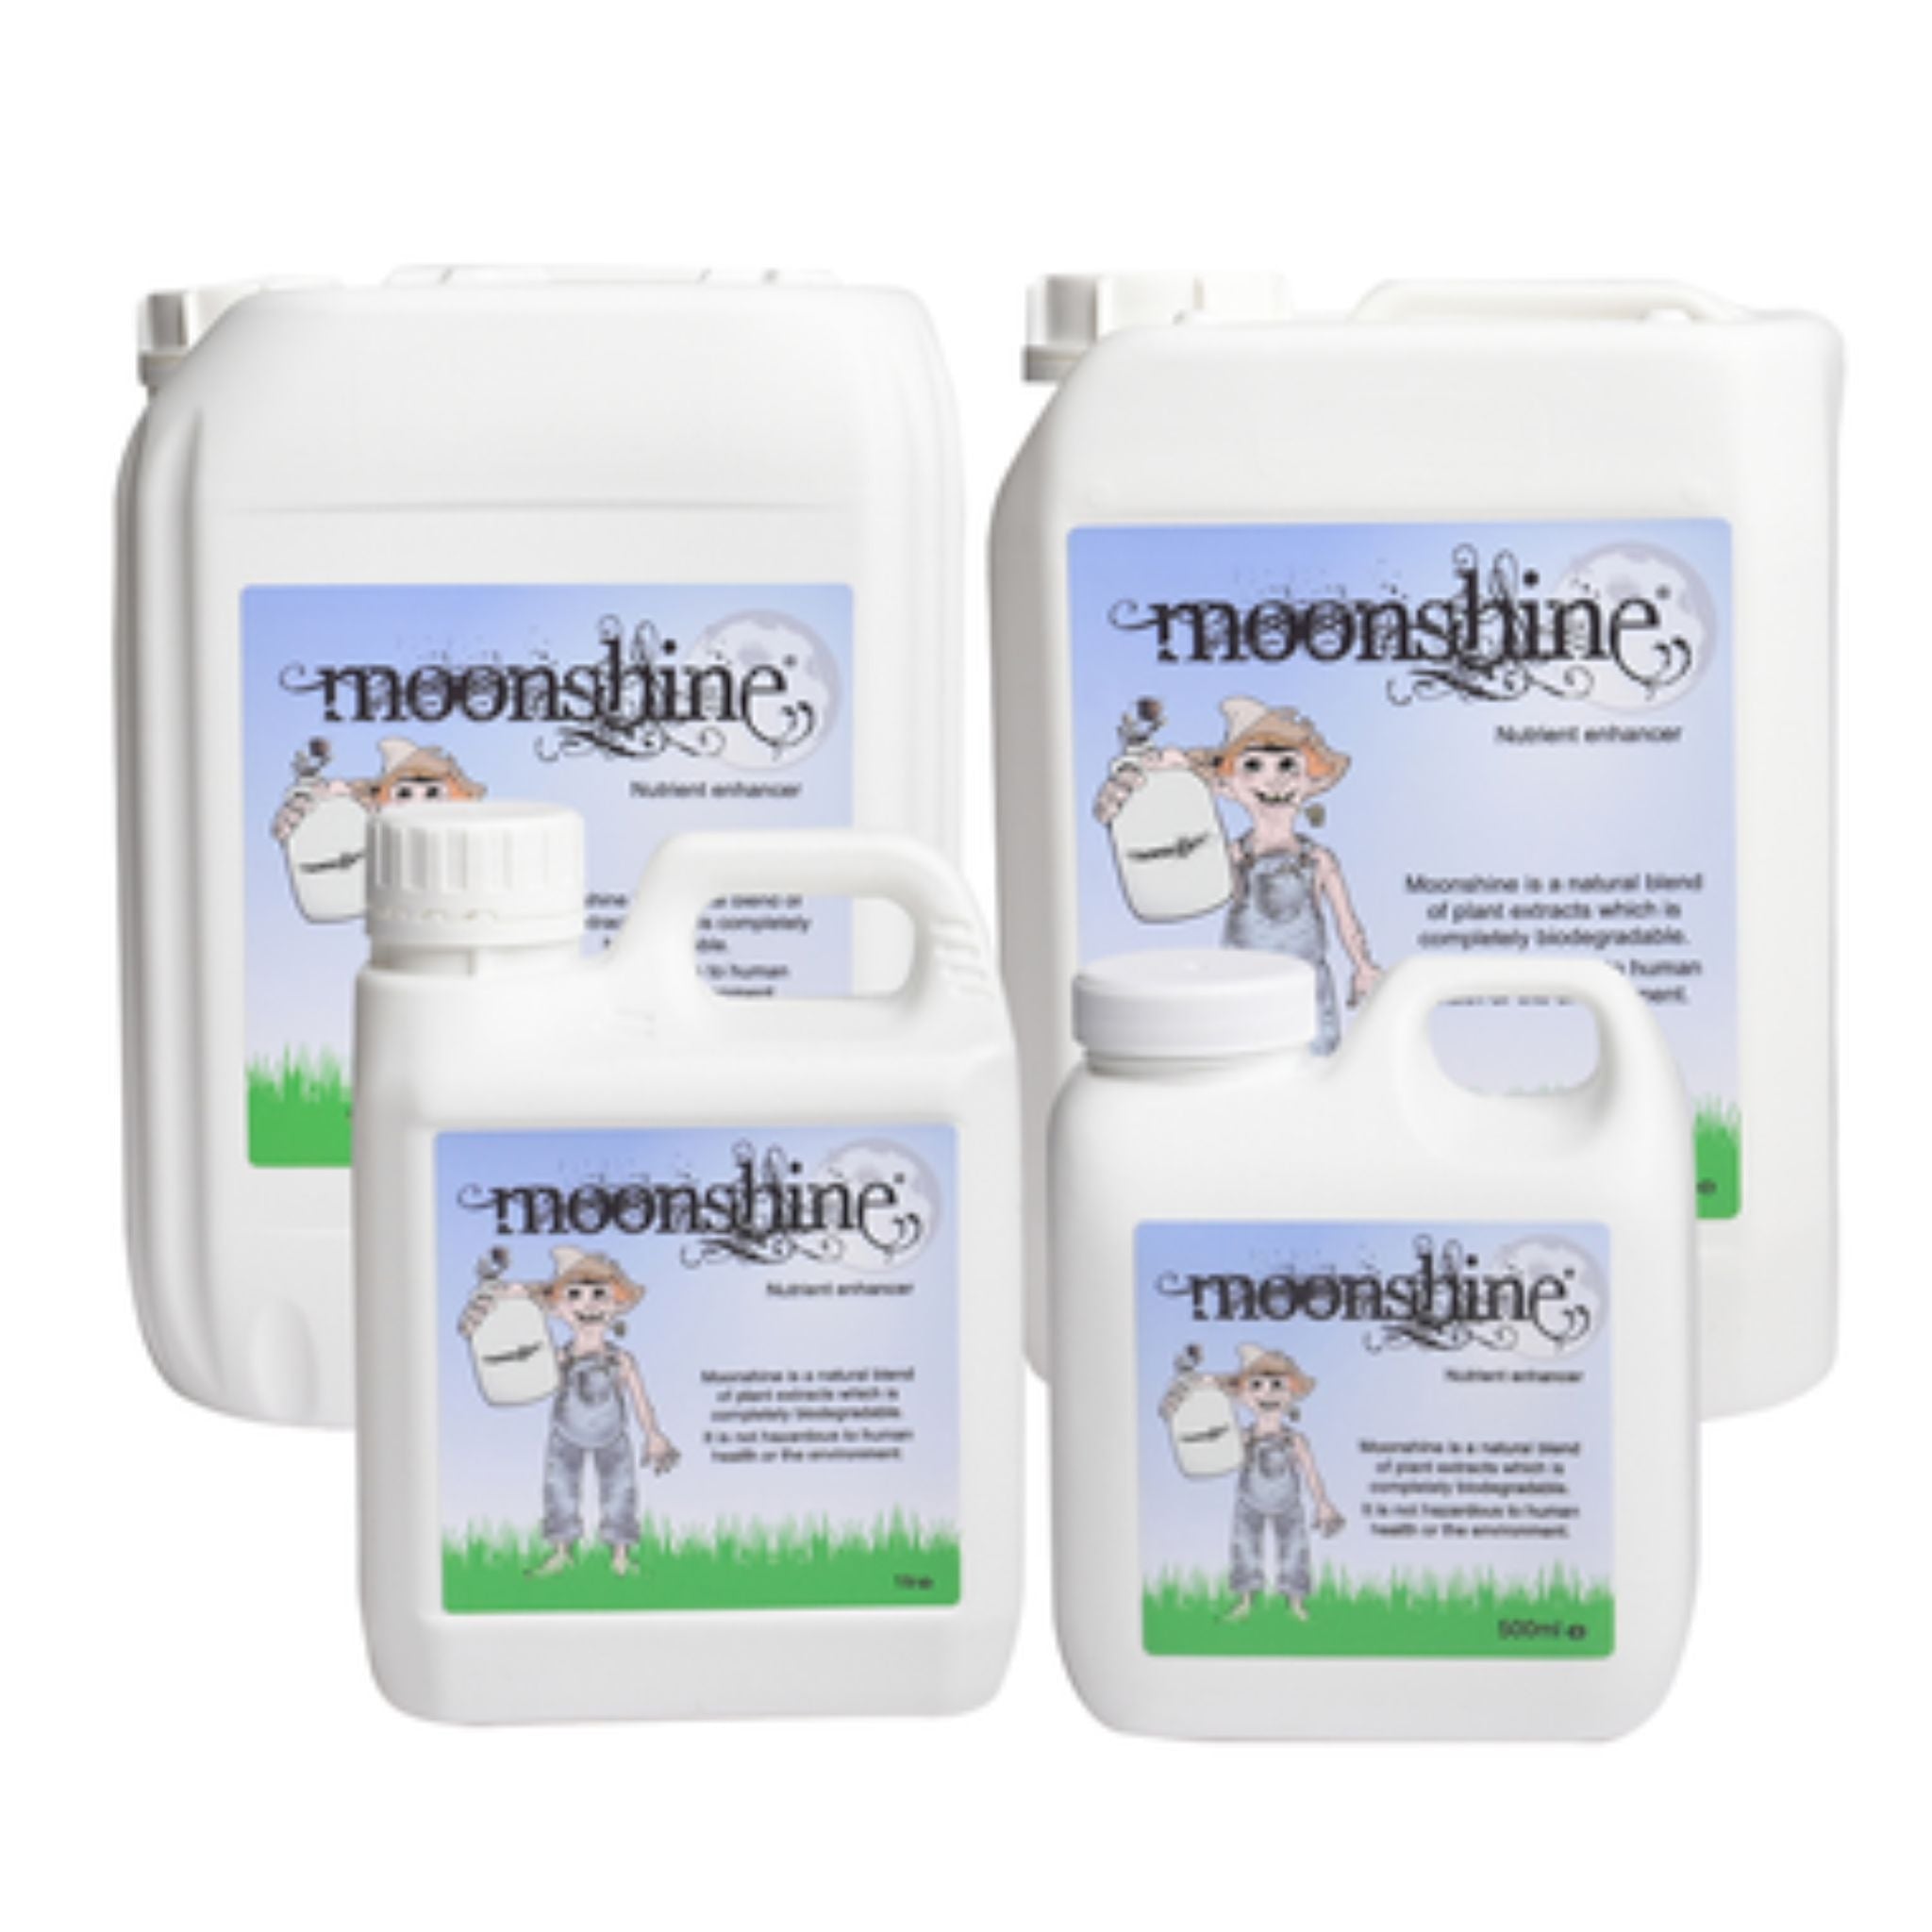 Moonshine Nutrient Enhancer